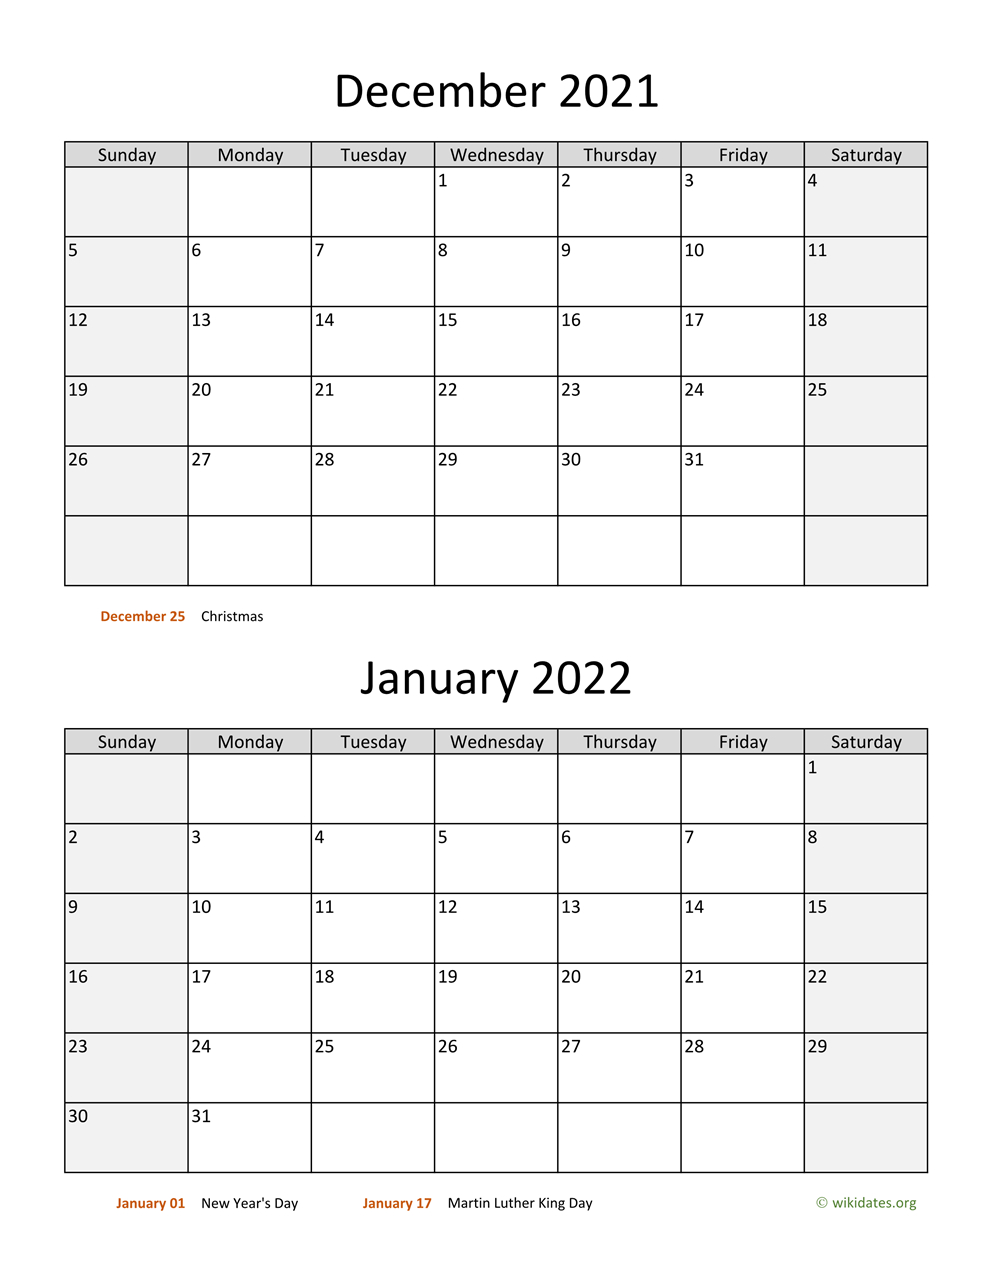 December 2021 And January 2022 Calendar | Wikidates Calendar 2021 January To December Pdf